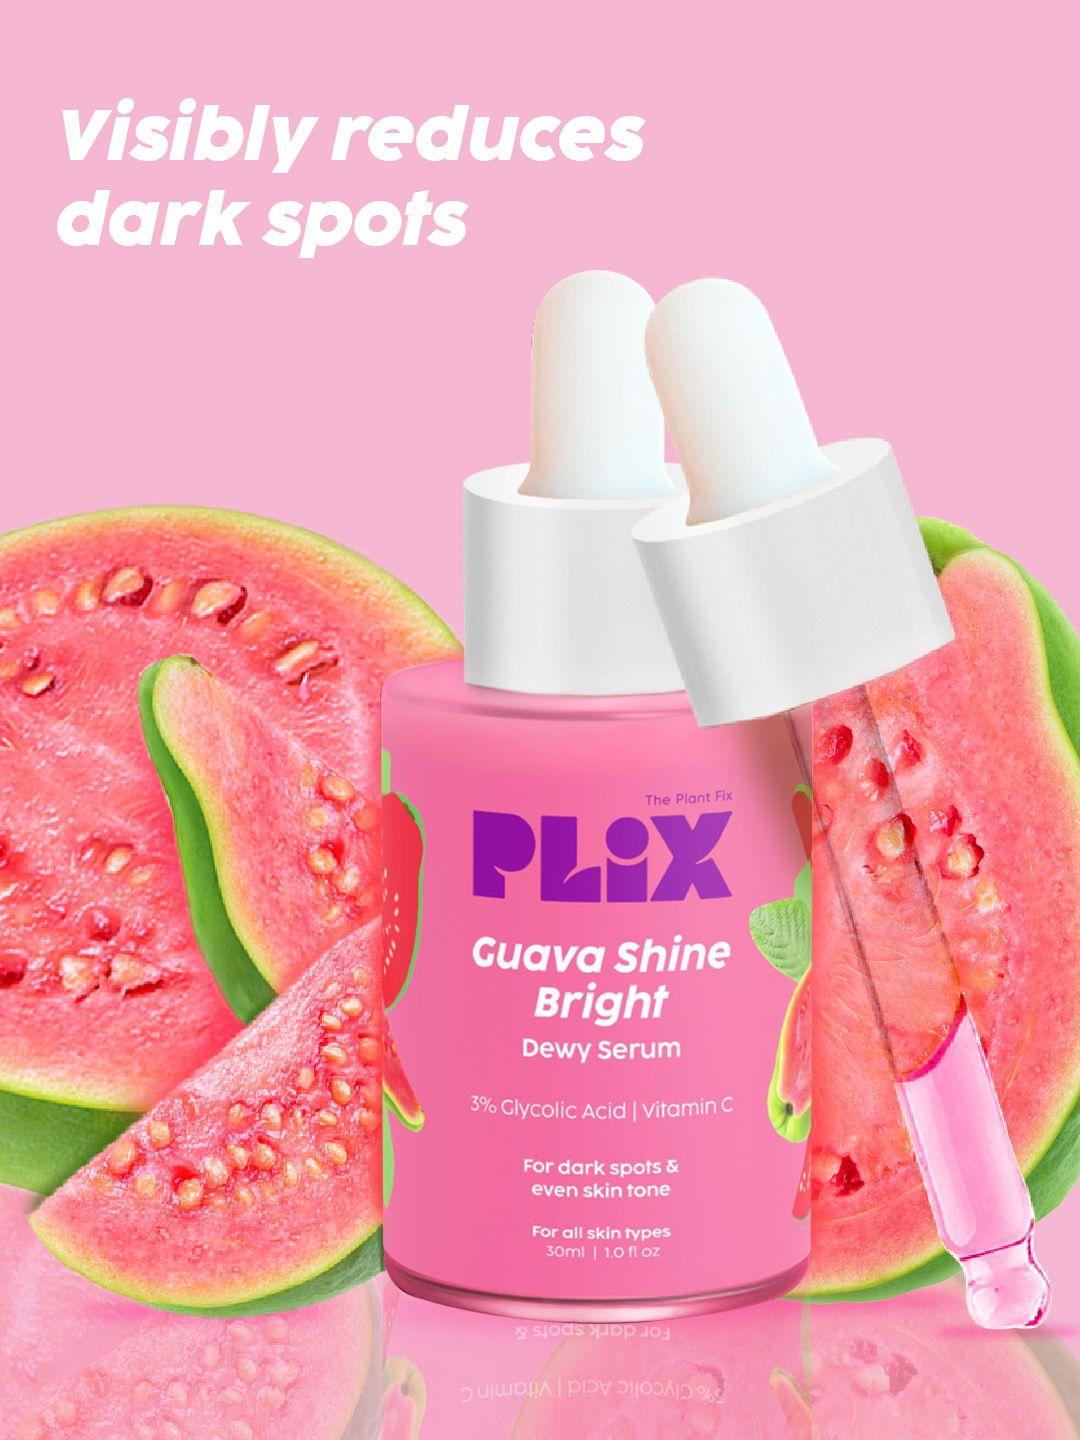 plix the plant fix guava shine bright dewy serum with 3% glycolic acid & vitamin c - 30ml